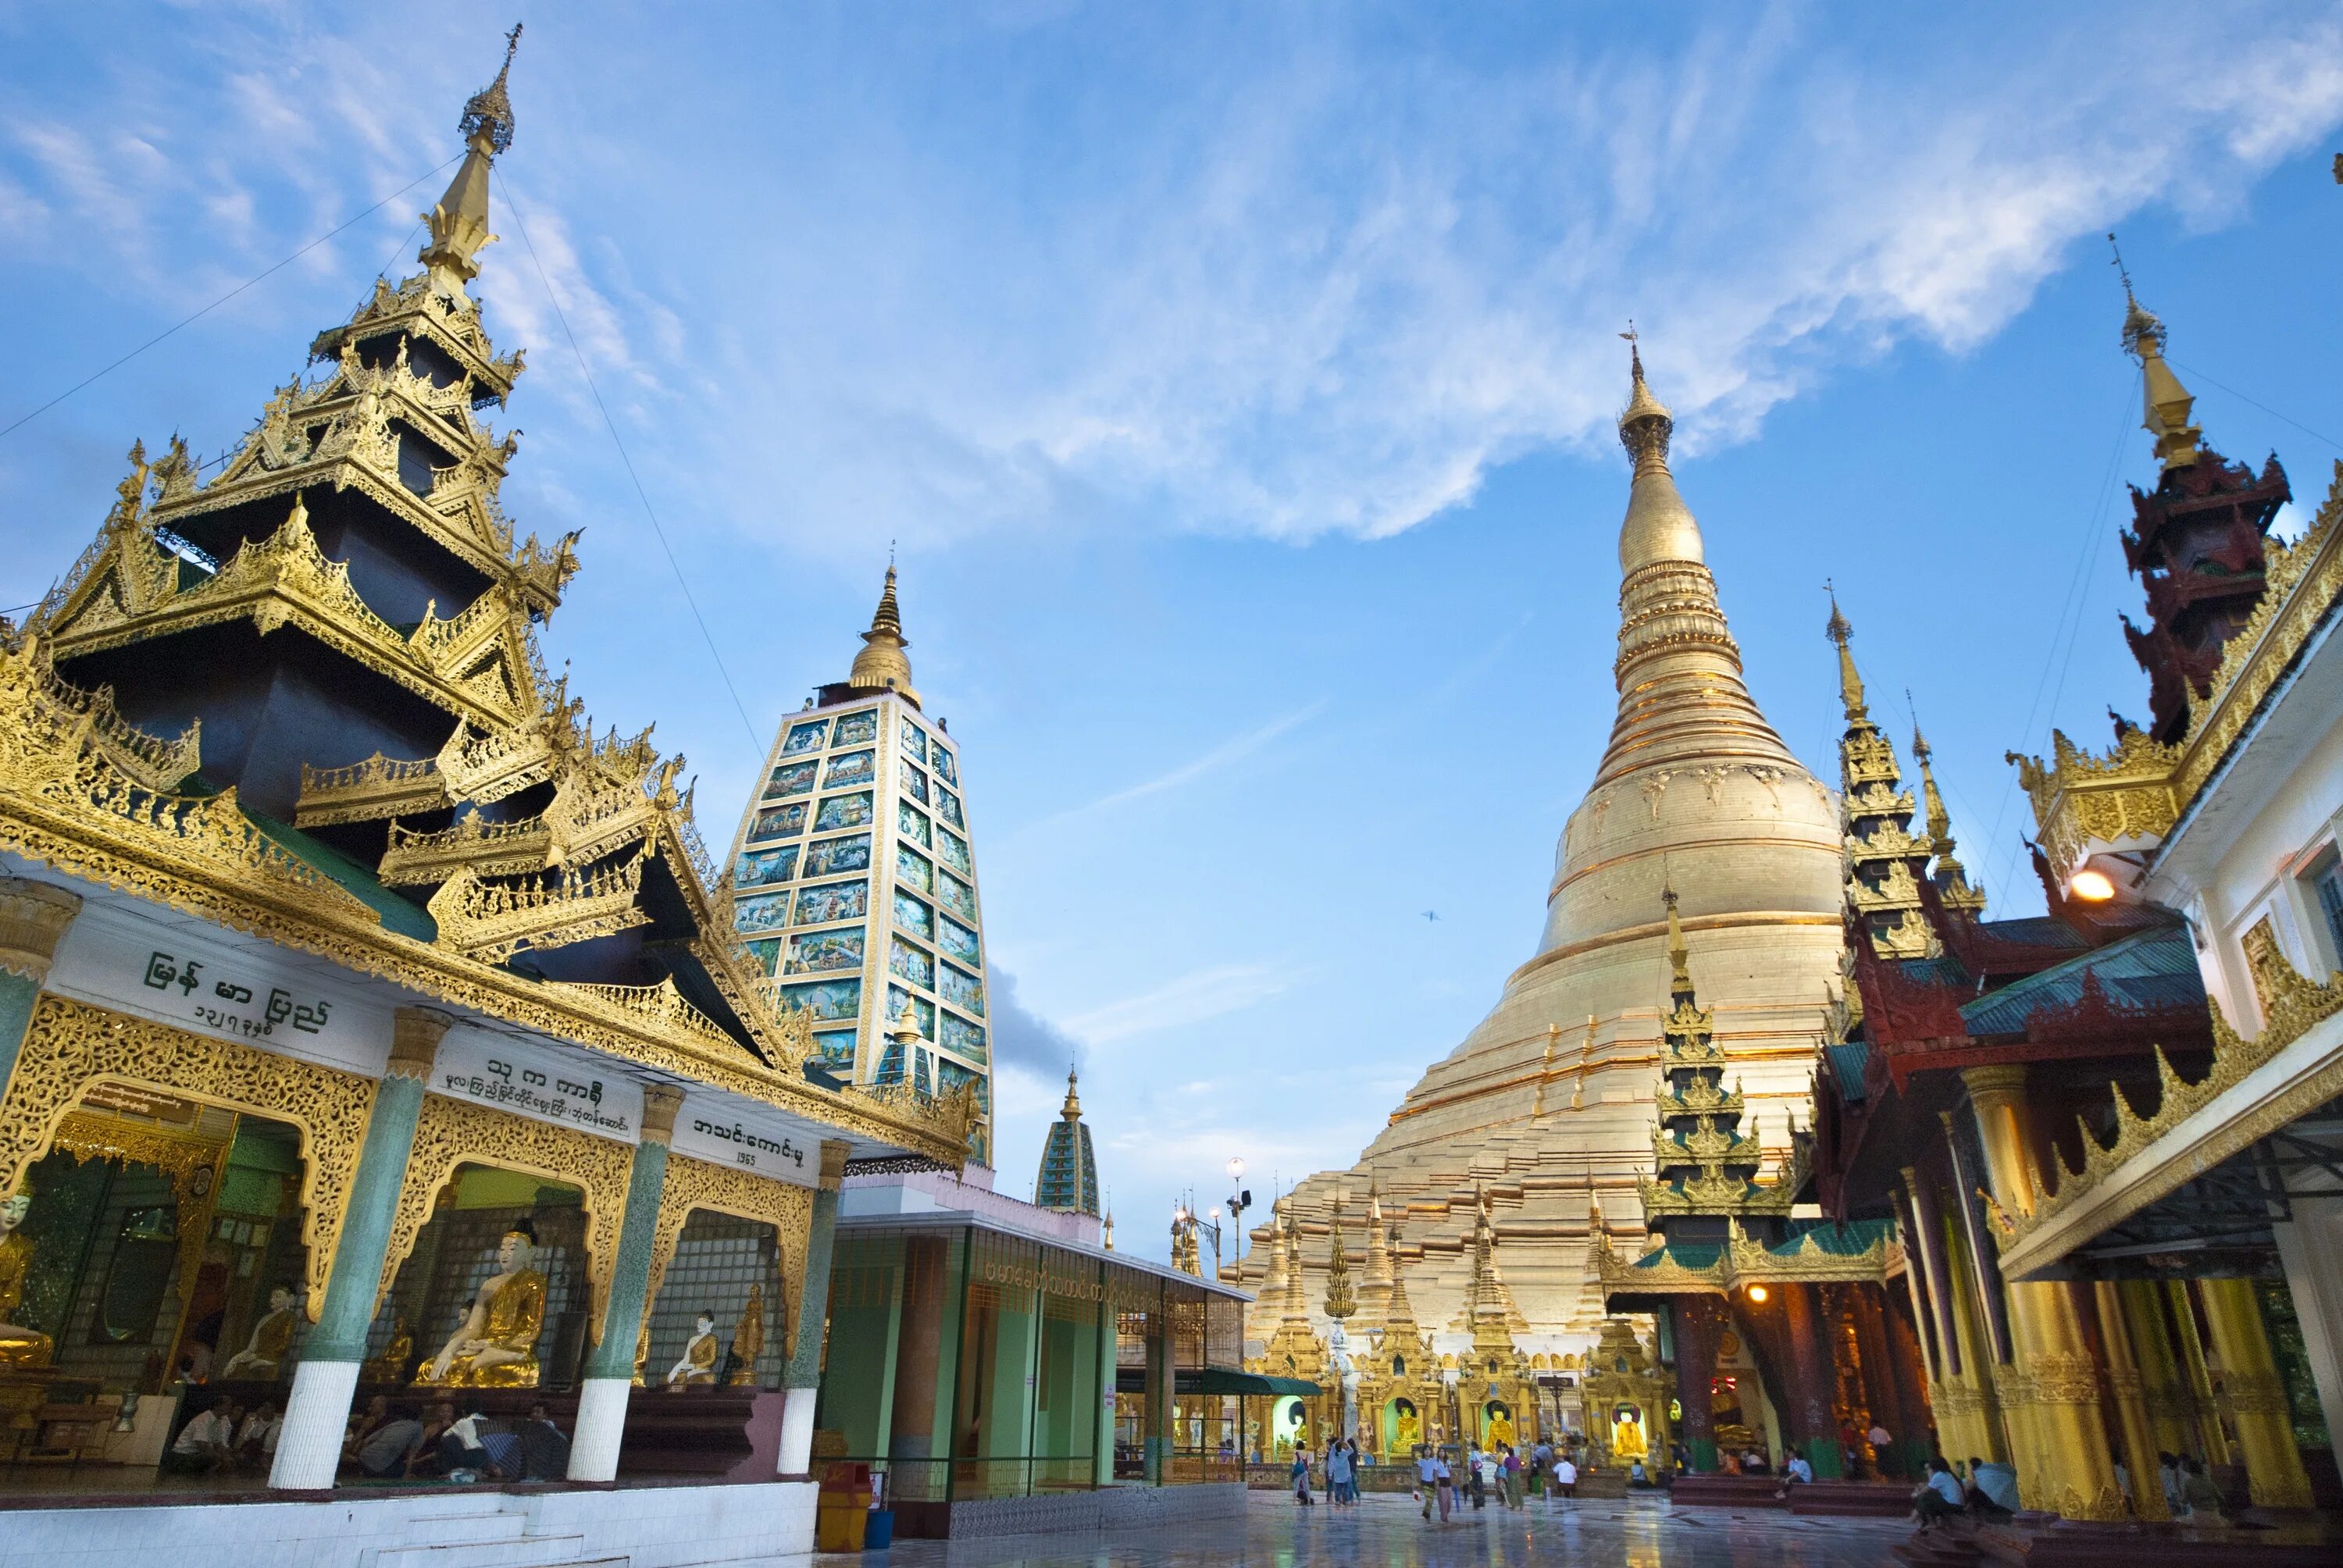 Янгон храм Шведагон. Золотая ступа Шведагон. Золотая пагода Мьянма. Золотой дом Бирма Мьянма. Культурные центры азии